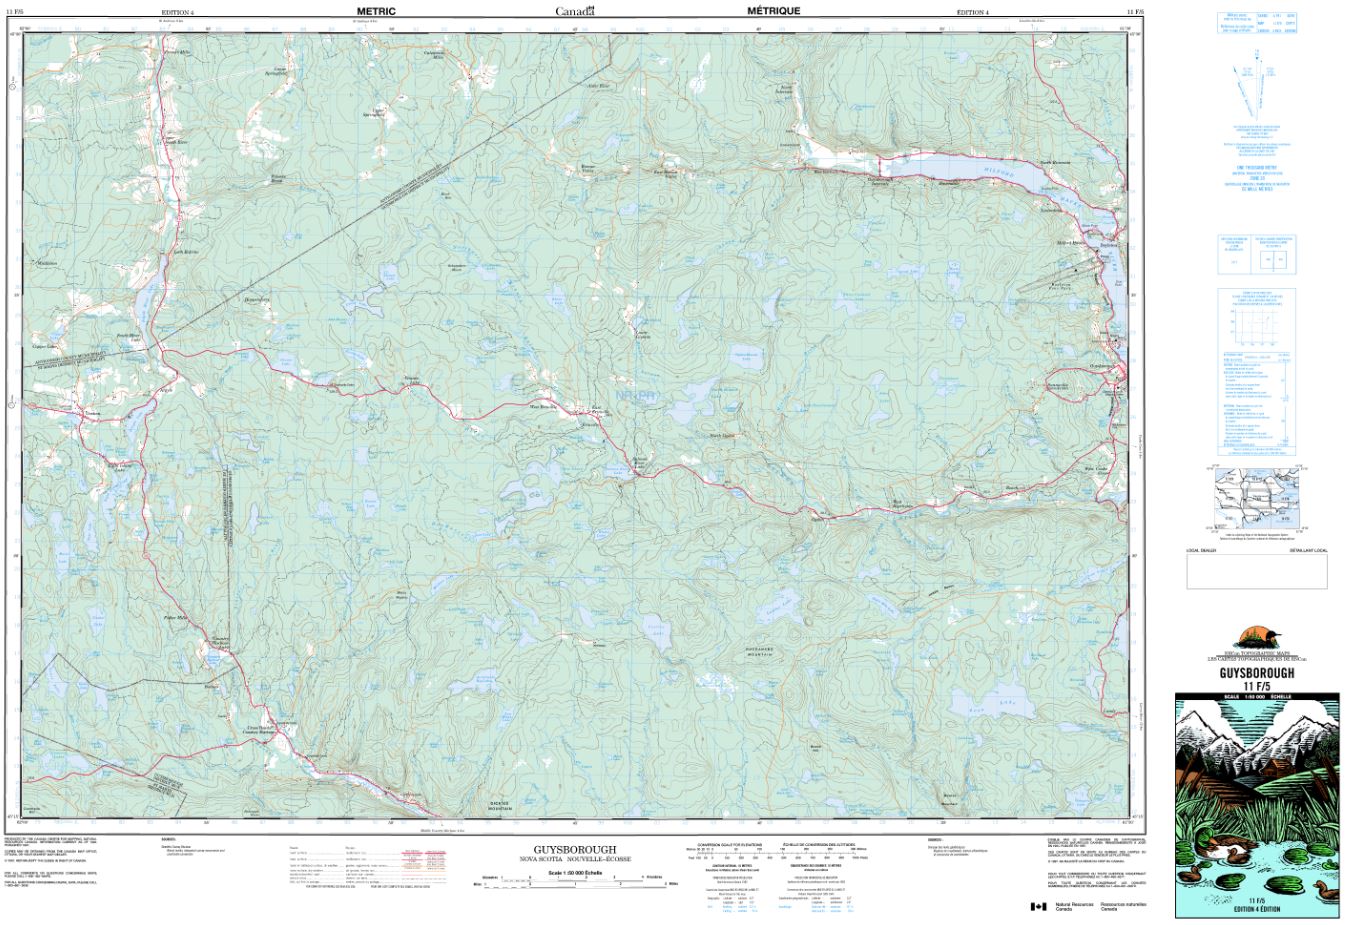 11F/05 Guysborough Topographic Map Nova Scotia